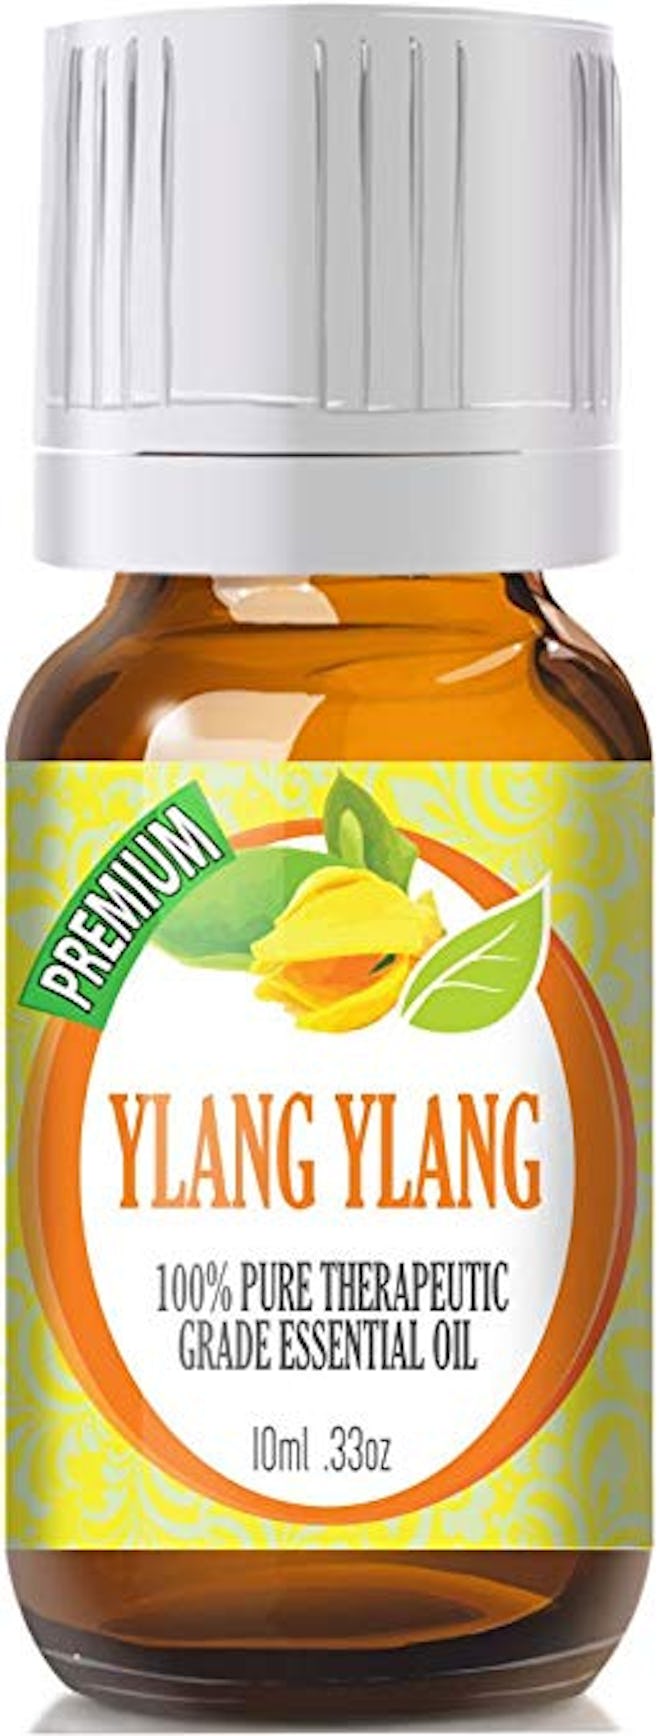 Healing Solutions Ylang Ylang Essential Oil